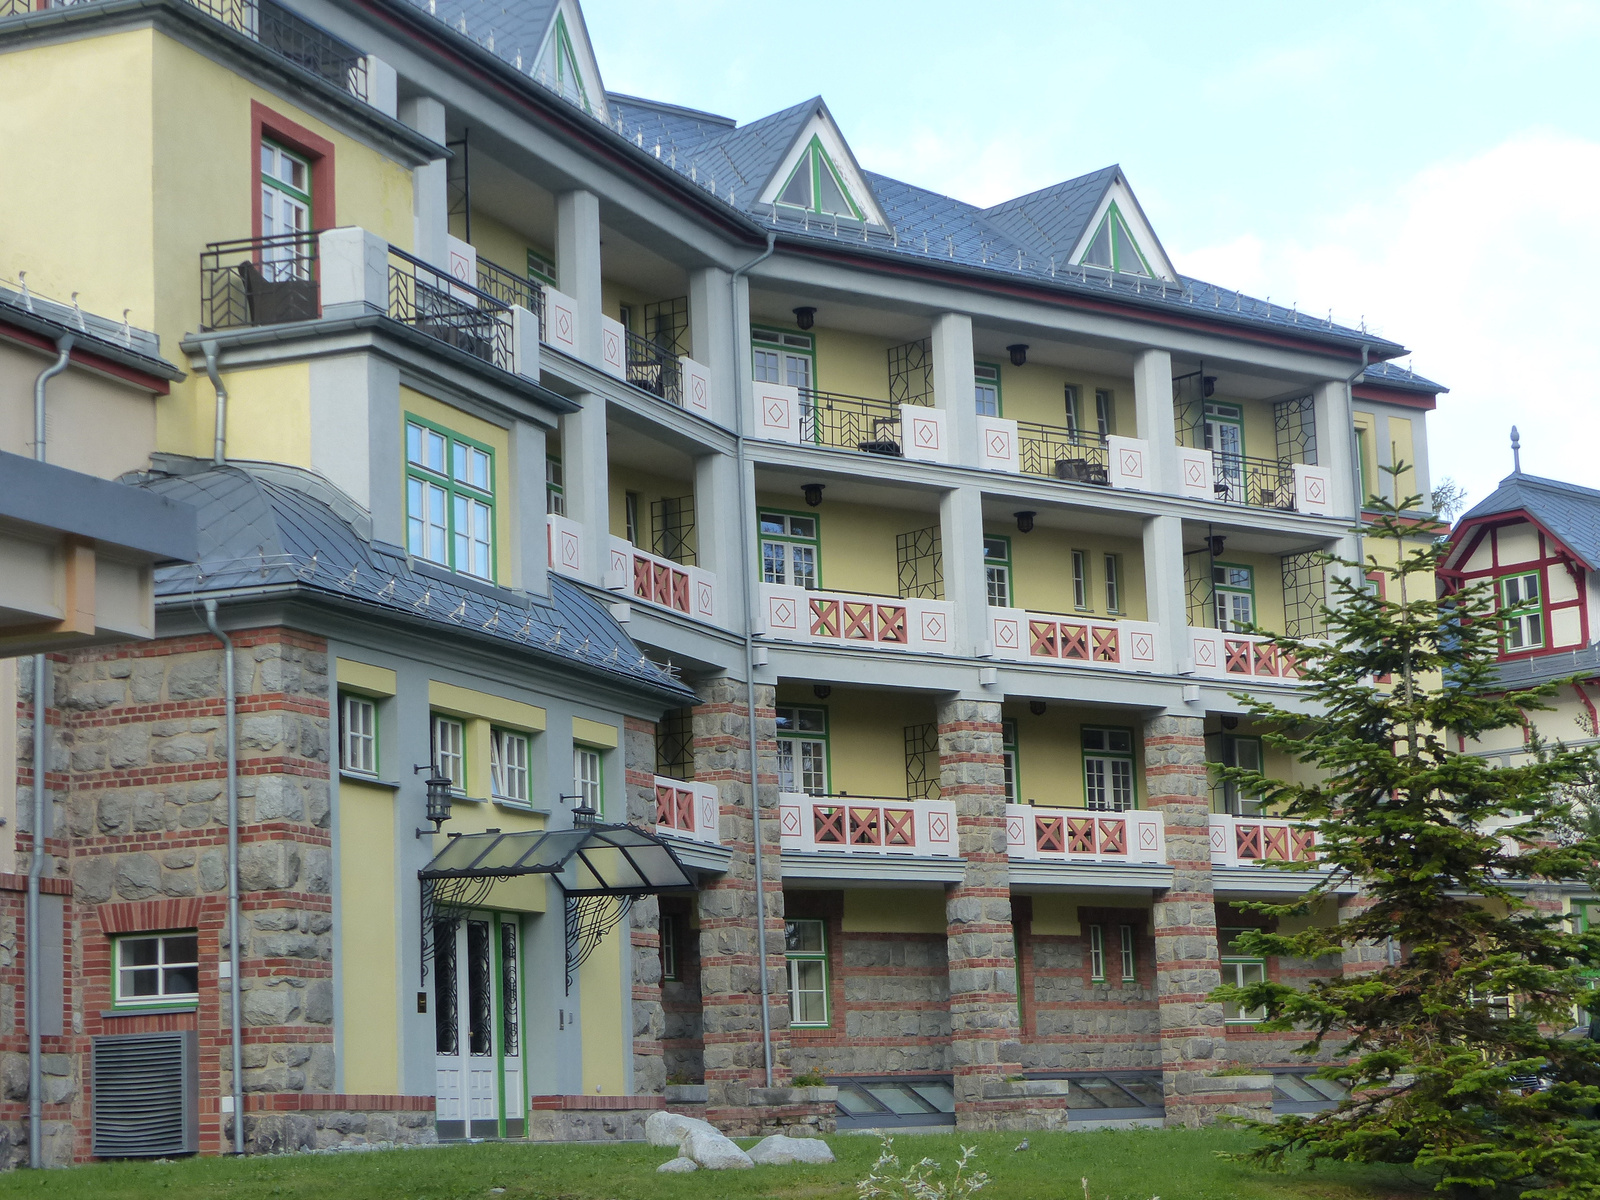 Csorbató (Štrbské Pleso), Grand Hotel Kempinski High Tatras, Sz